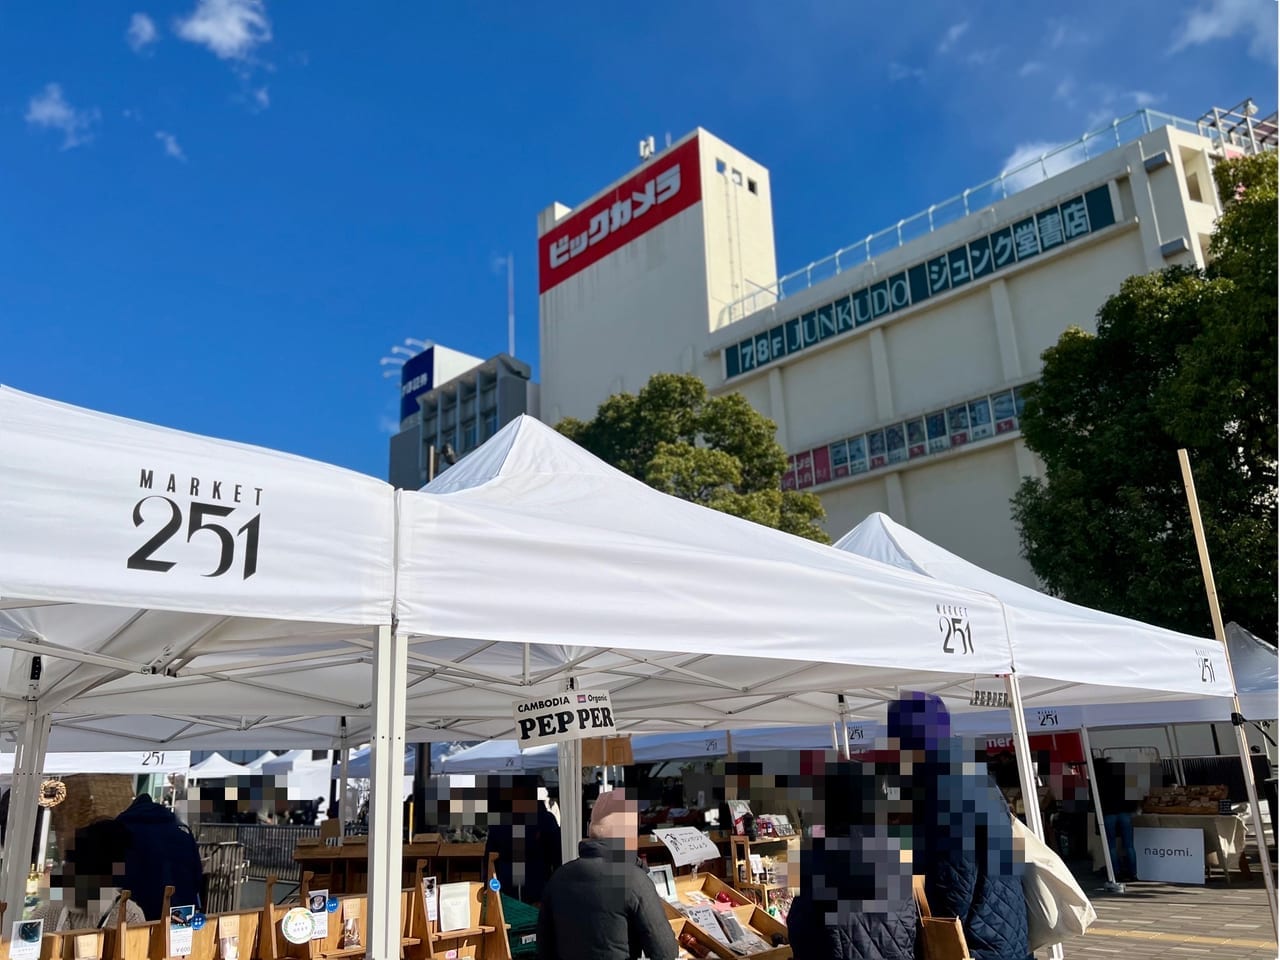 FRESH market in FUJISAWA